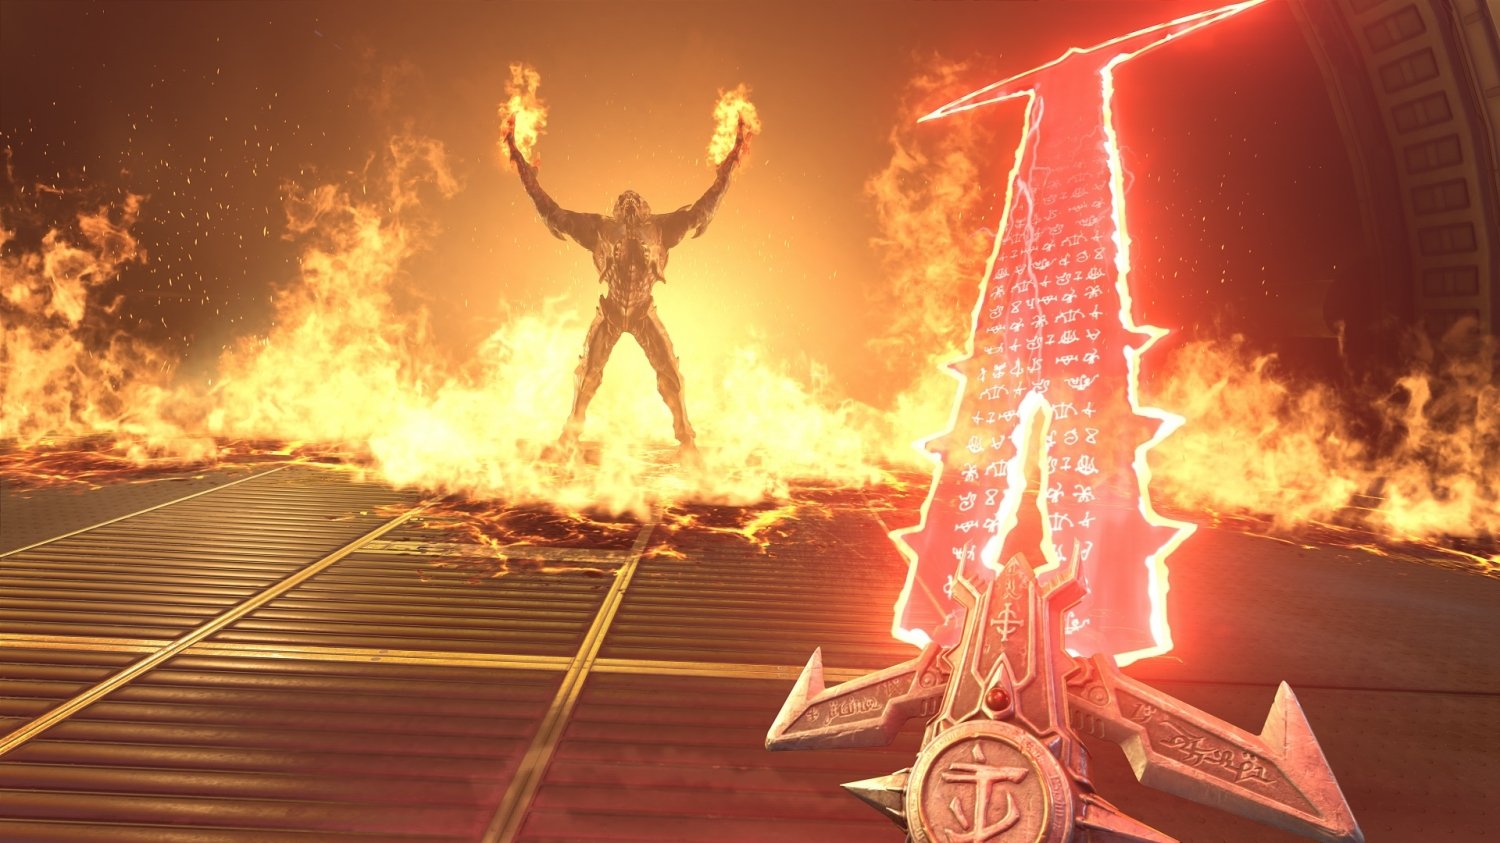 Doom Eternal Runs At 1440p 60fps On Ps4 Pro 1800p 60fps On Xbox One X Tweaktown